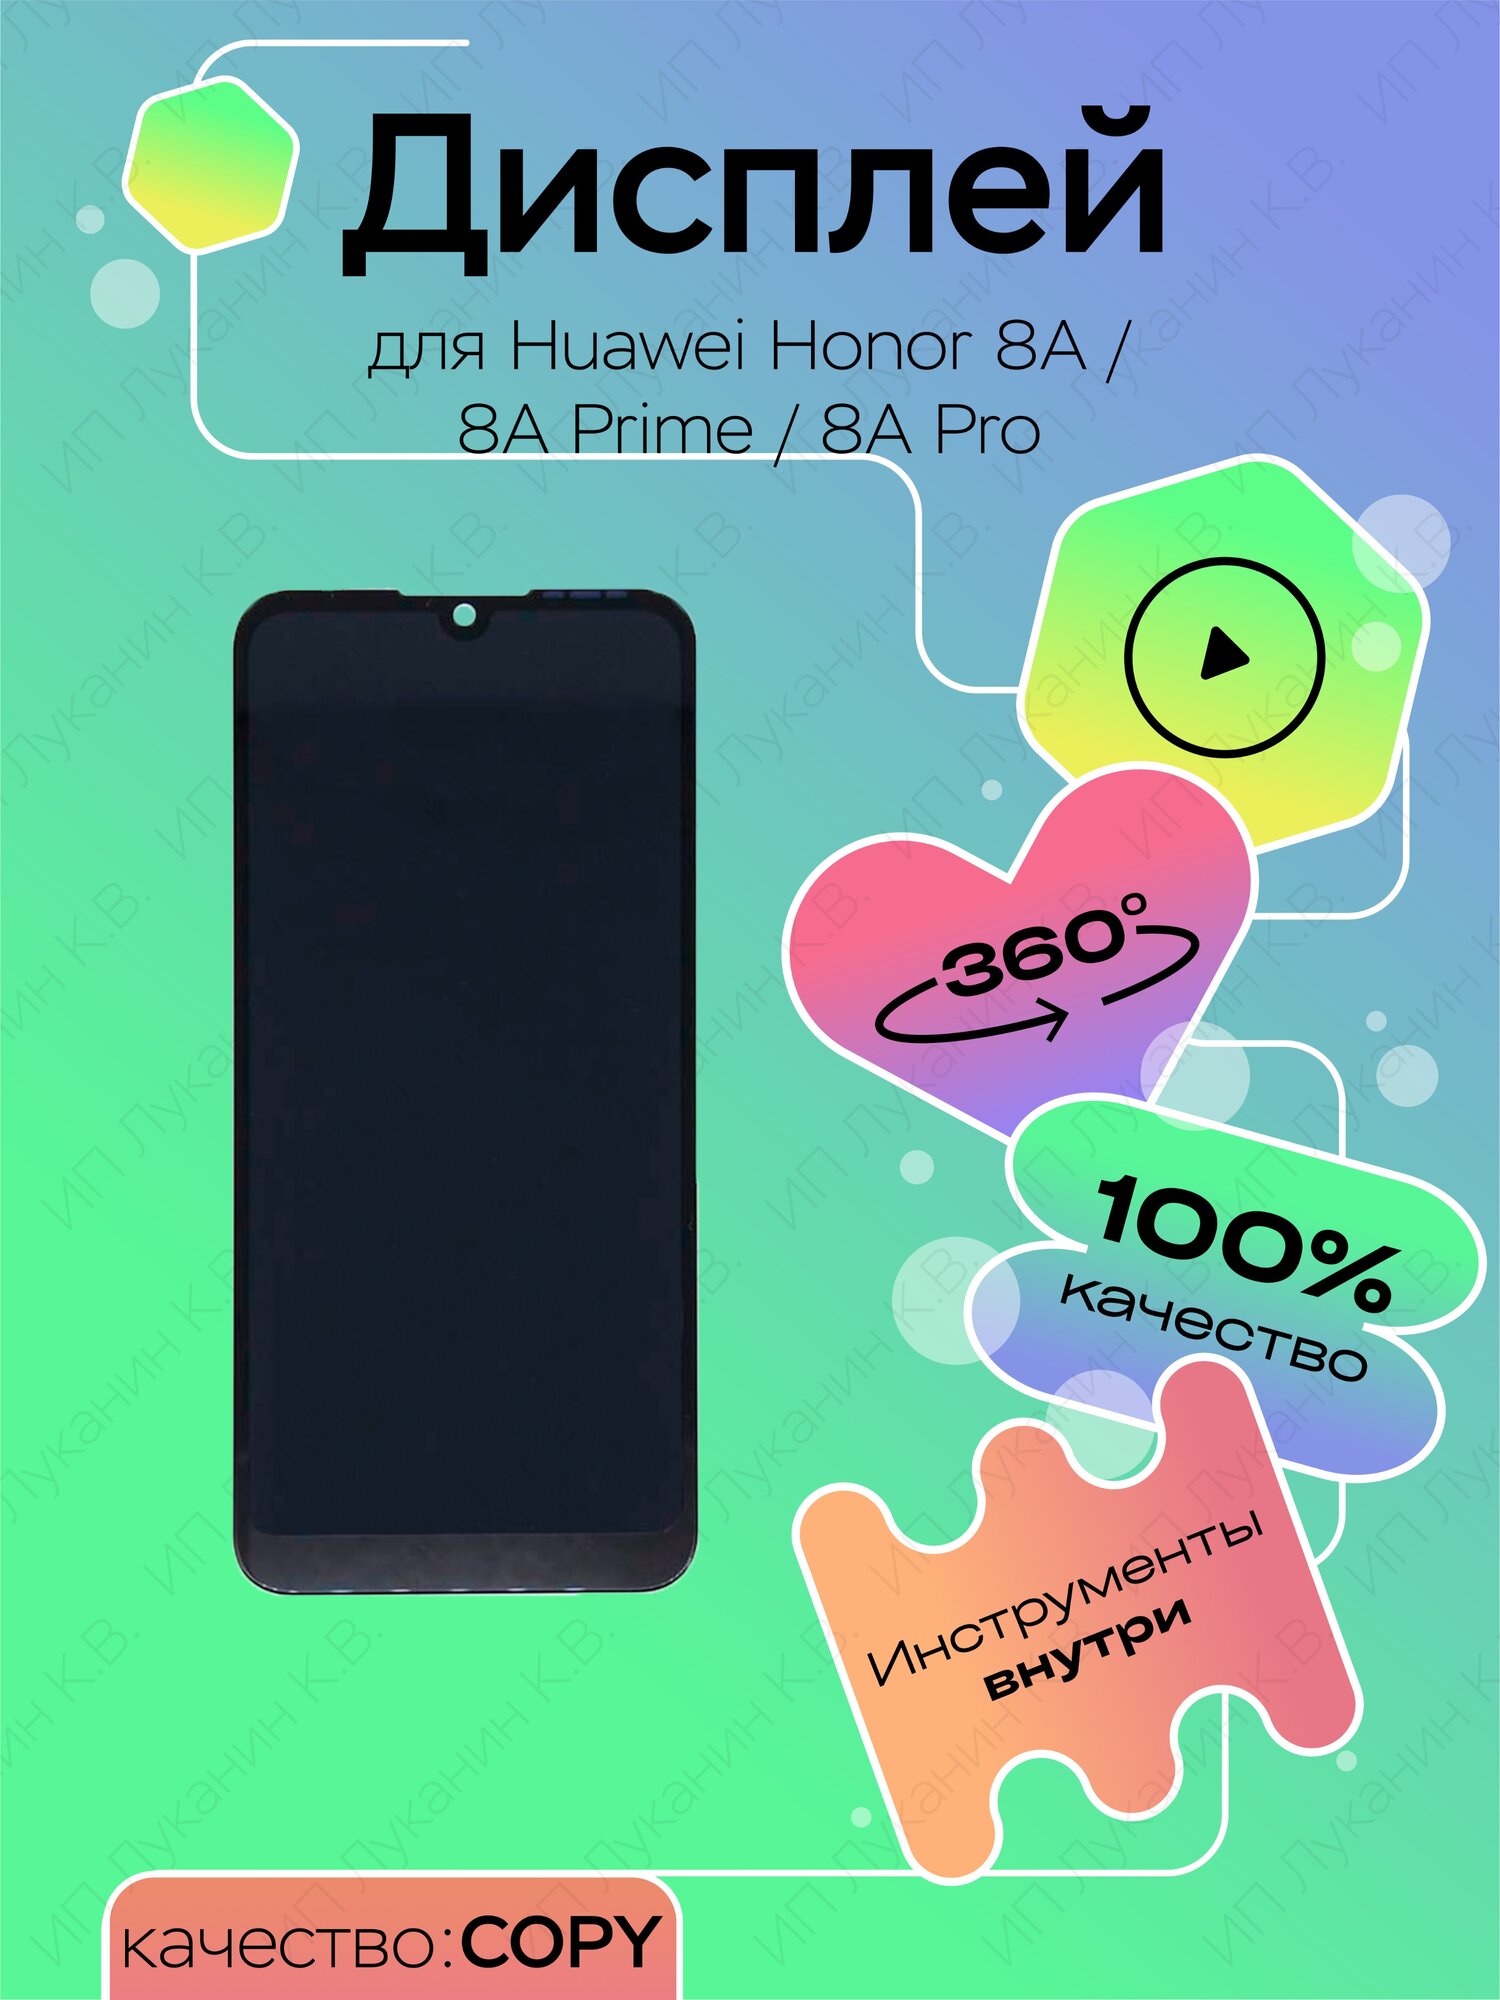 Дисплей для Huawei Honor 8A 8A Prime 8A Pro JAT-LX1 черный